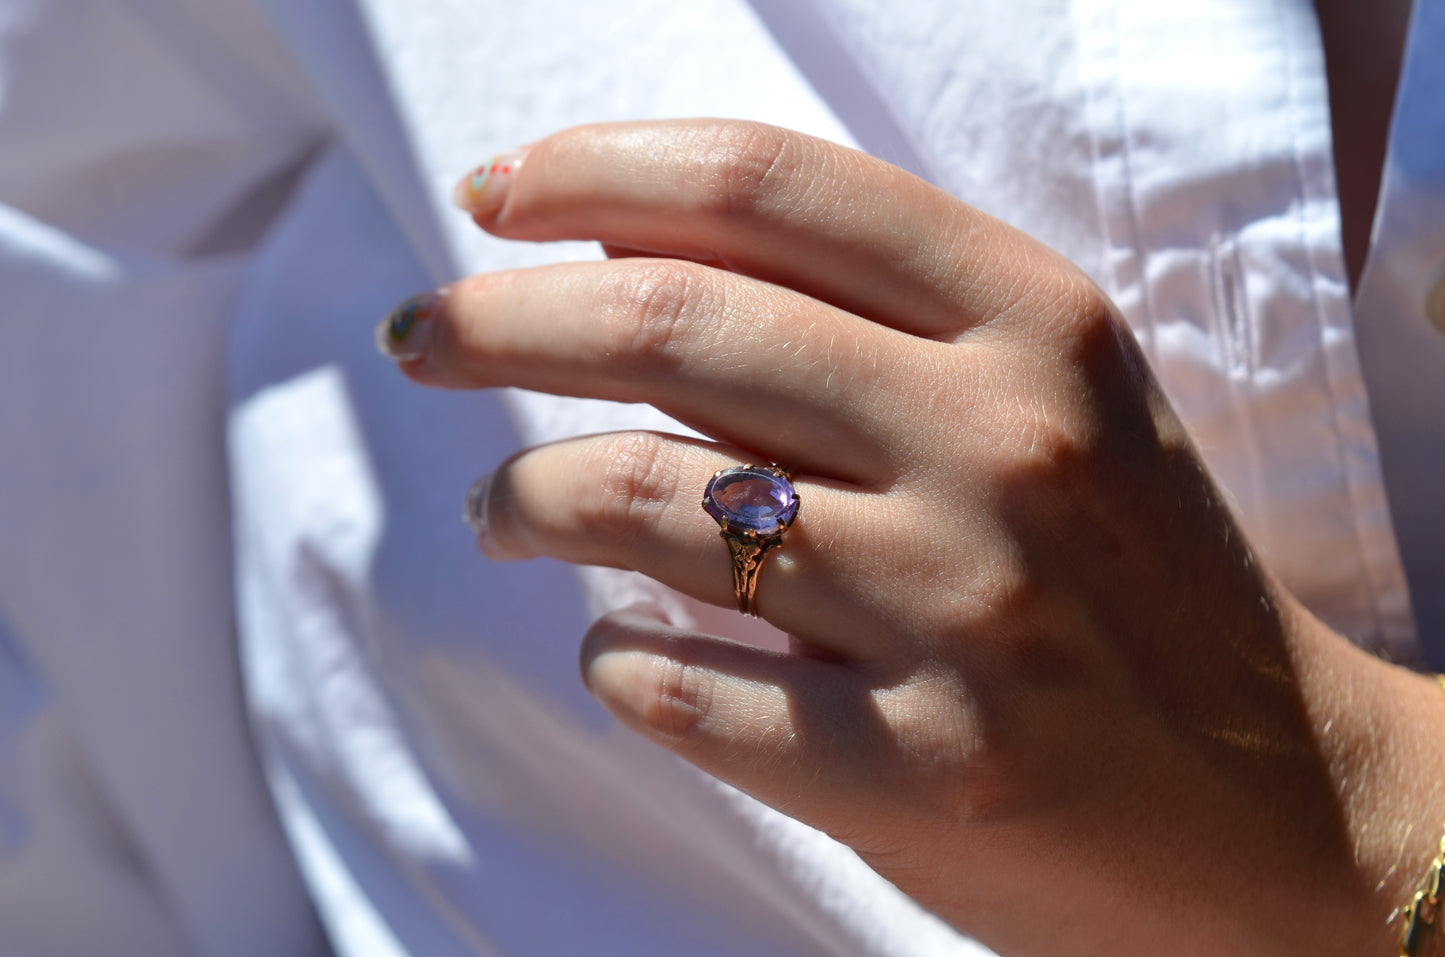 Romantic Victorian Amethyst Ring